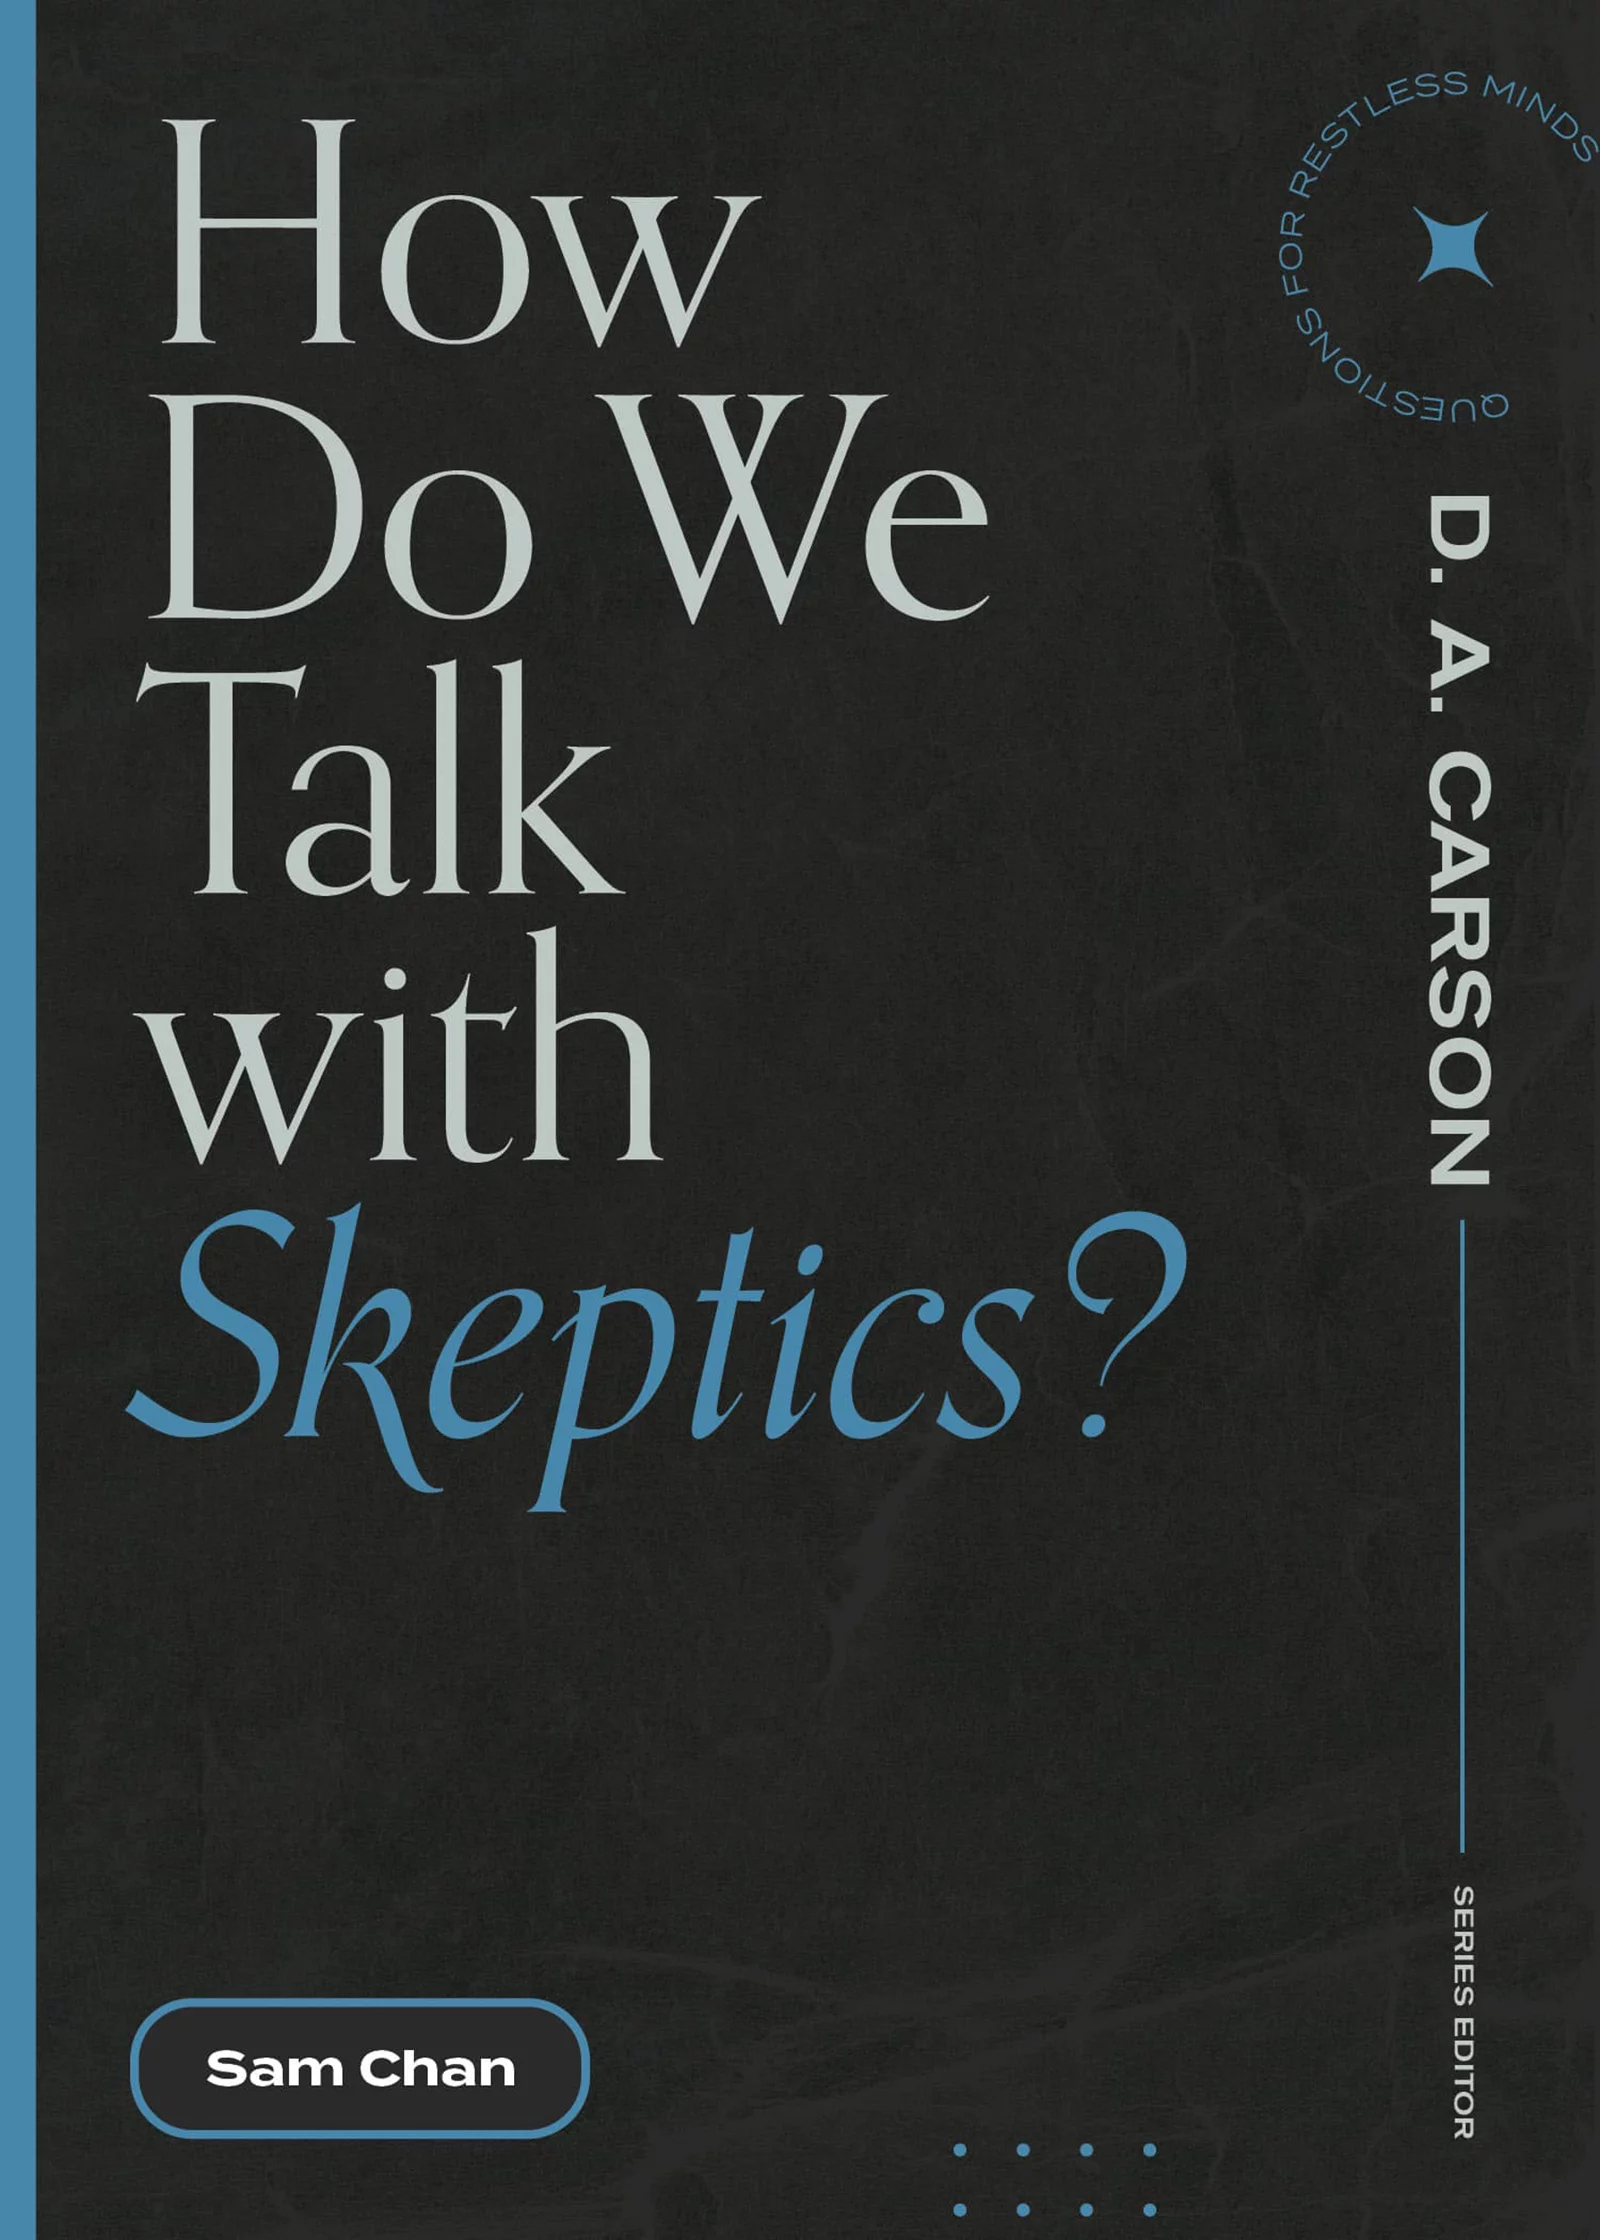  2022/08/how-do-we-talk-to-skeptics.webp 